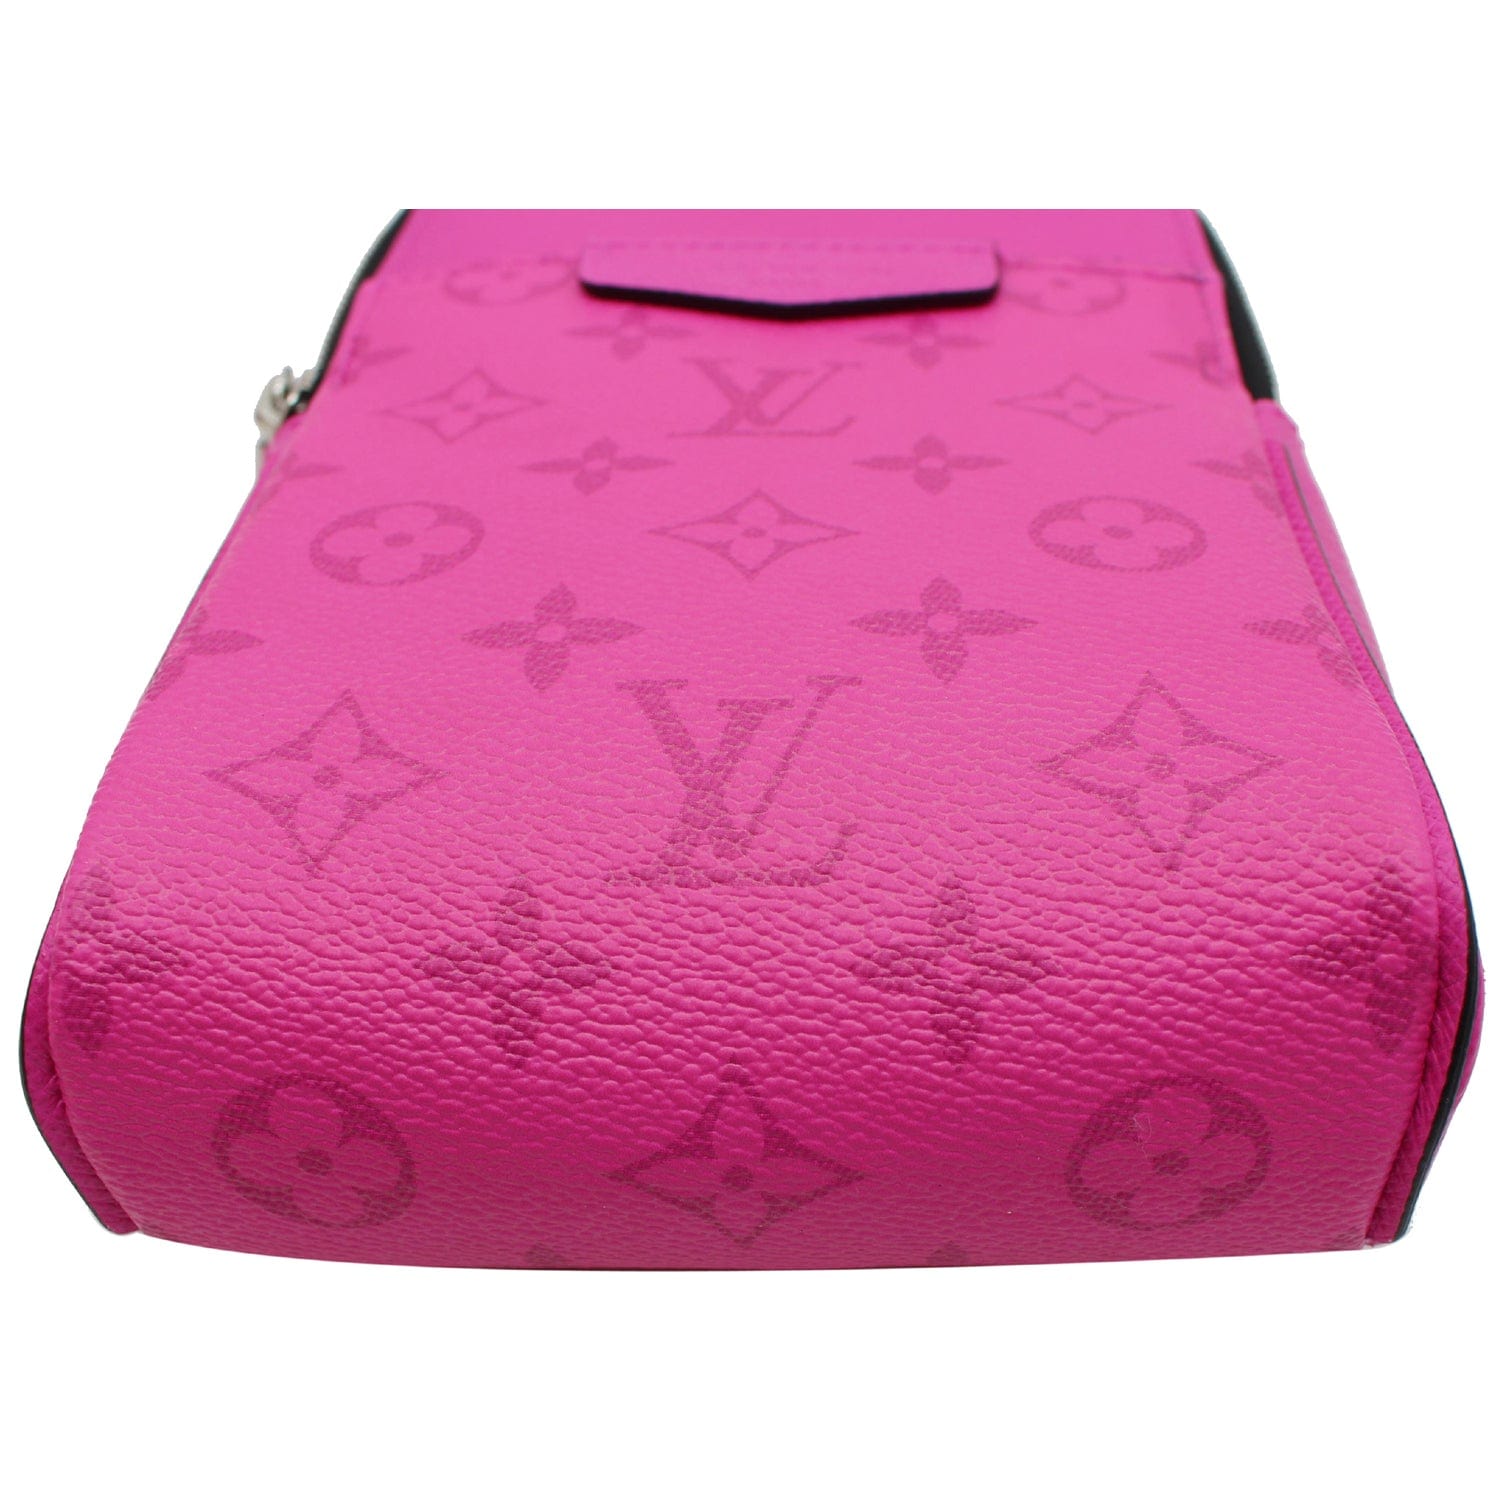 Louis Vuitton iPhone X Case, Pink Interior